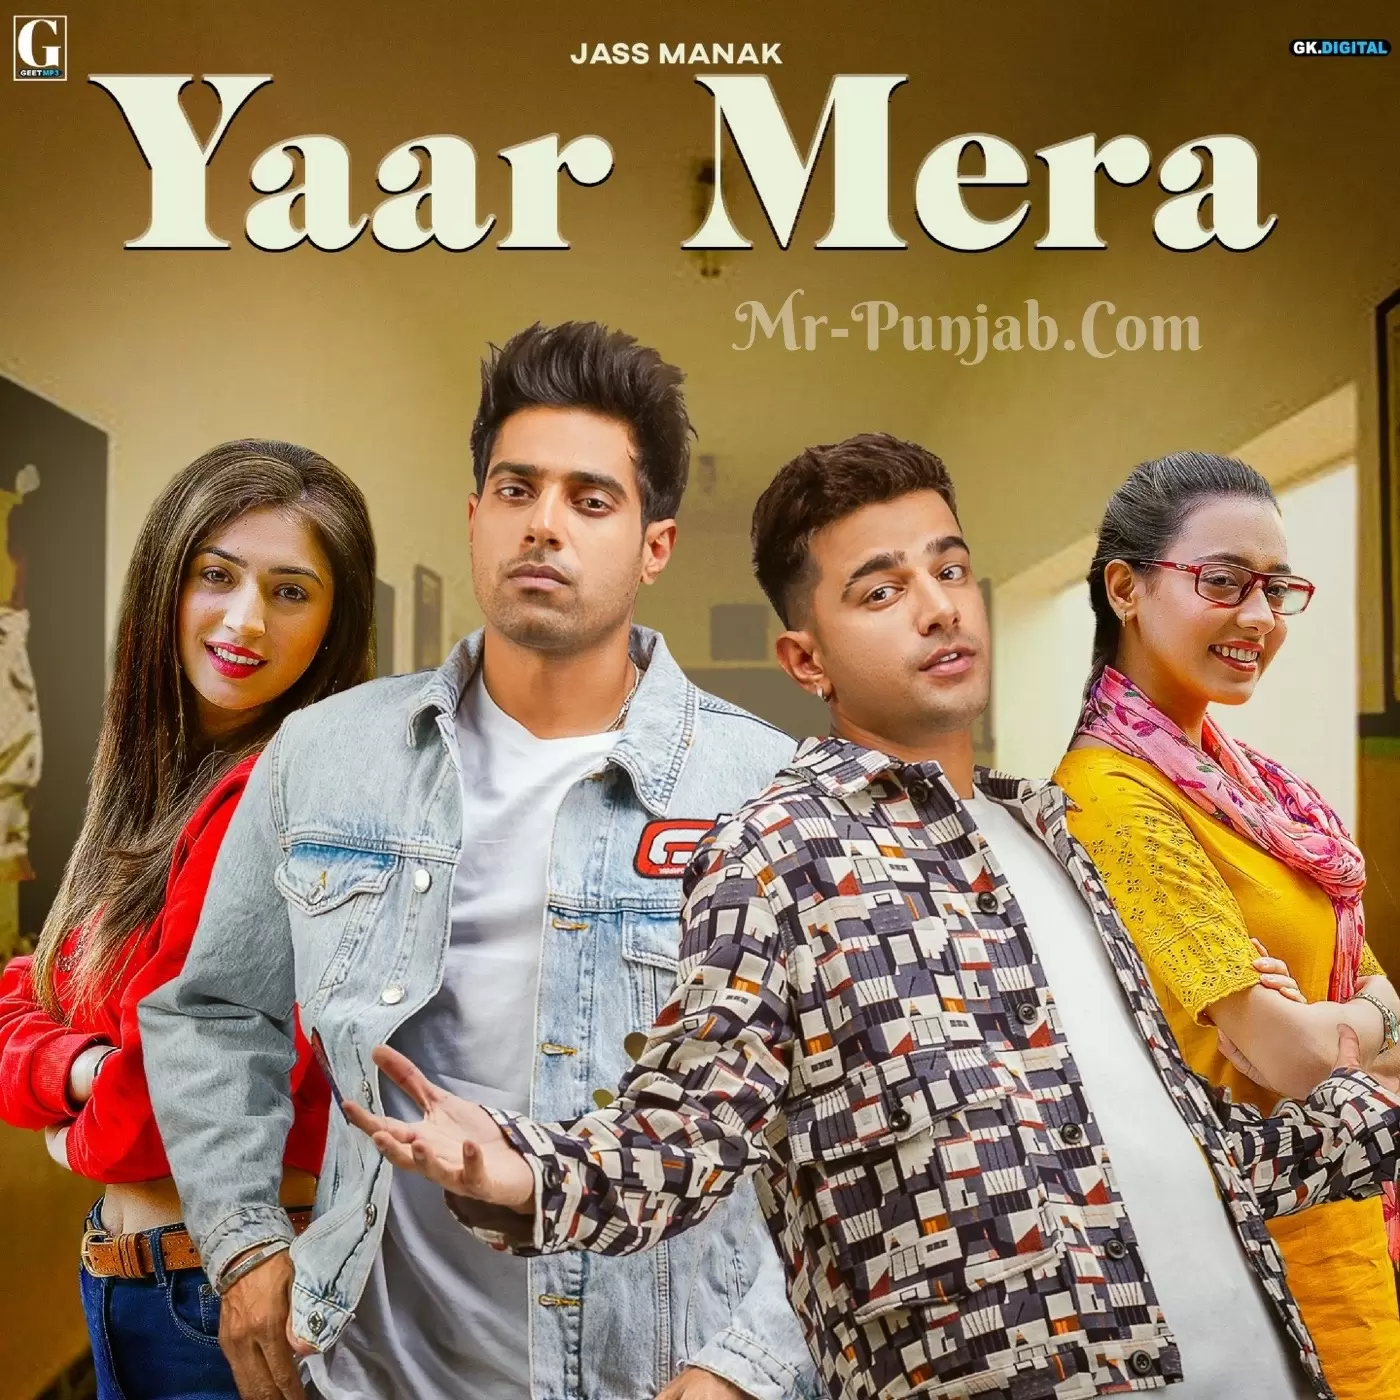 Yaar Mera Jass Manak Mp3 Download Song - Mr-Punjab